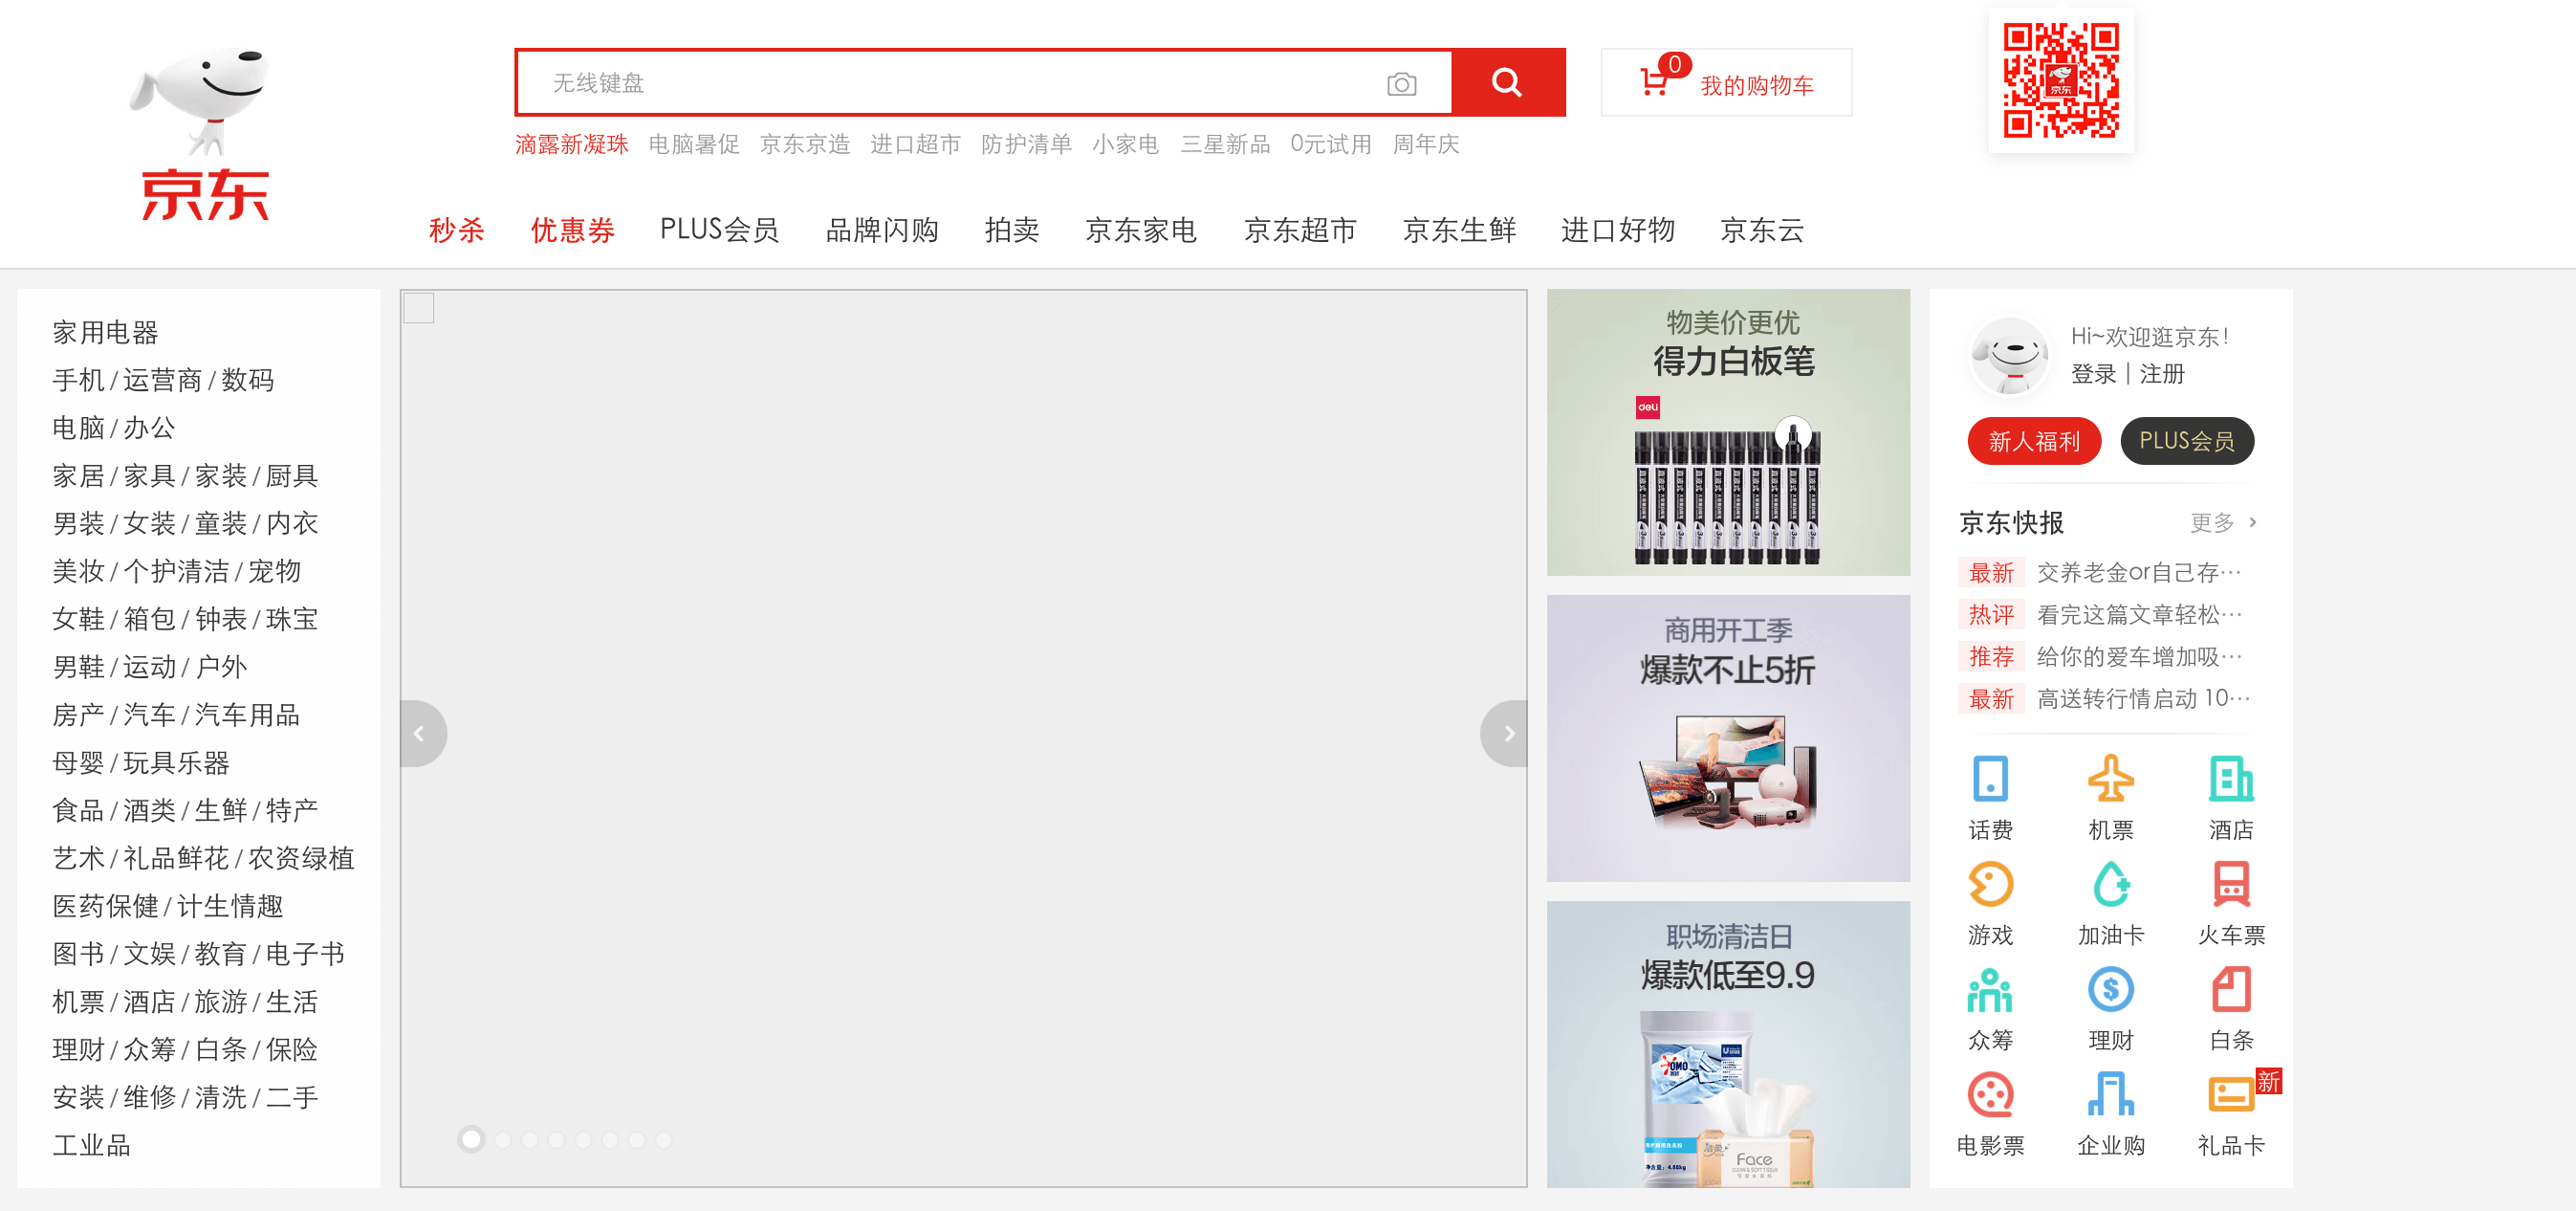 Jingdong's home page